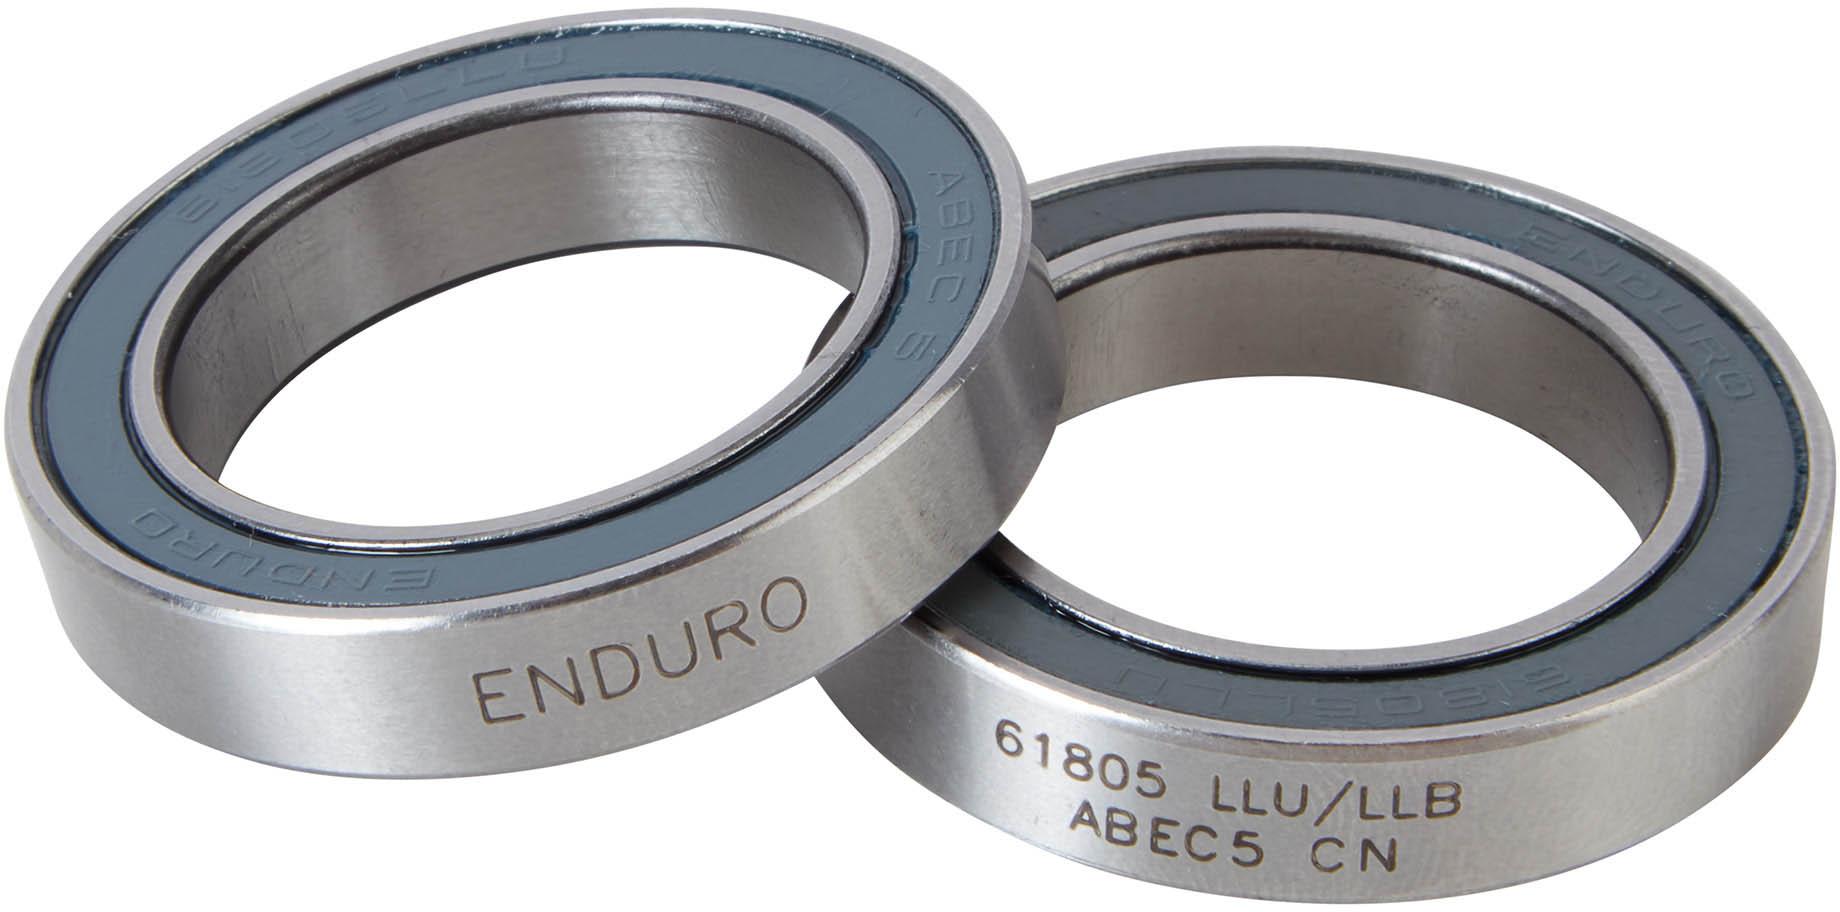 Nukeproof Enduro 61805 Abec5 V2 Hub Bearing Pair - Silver